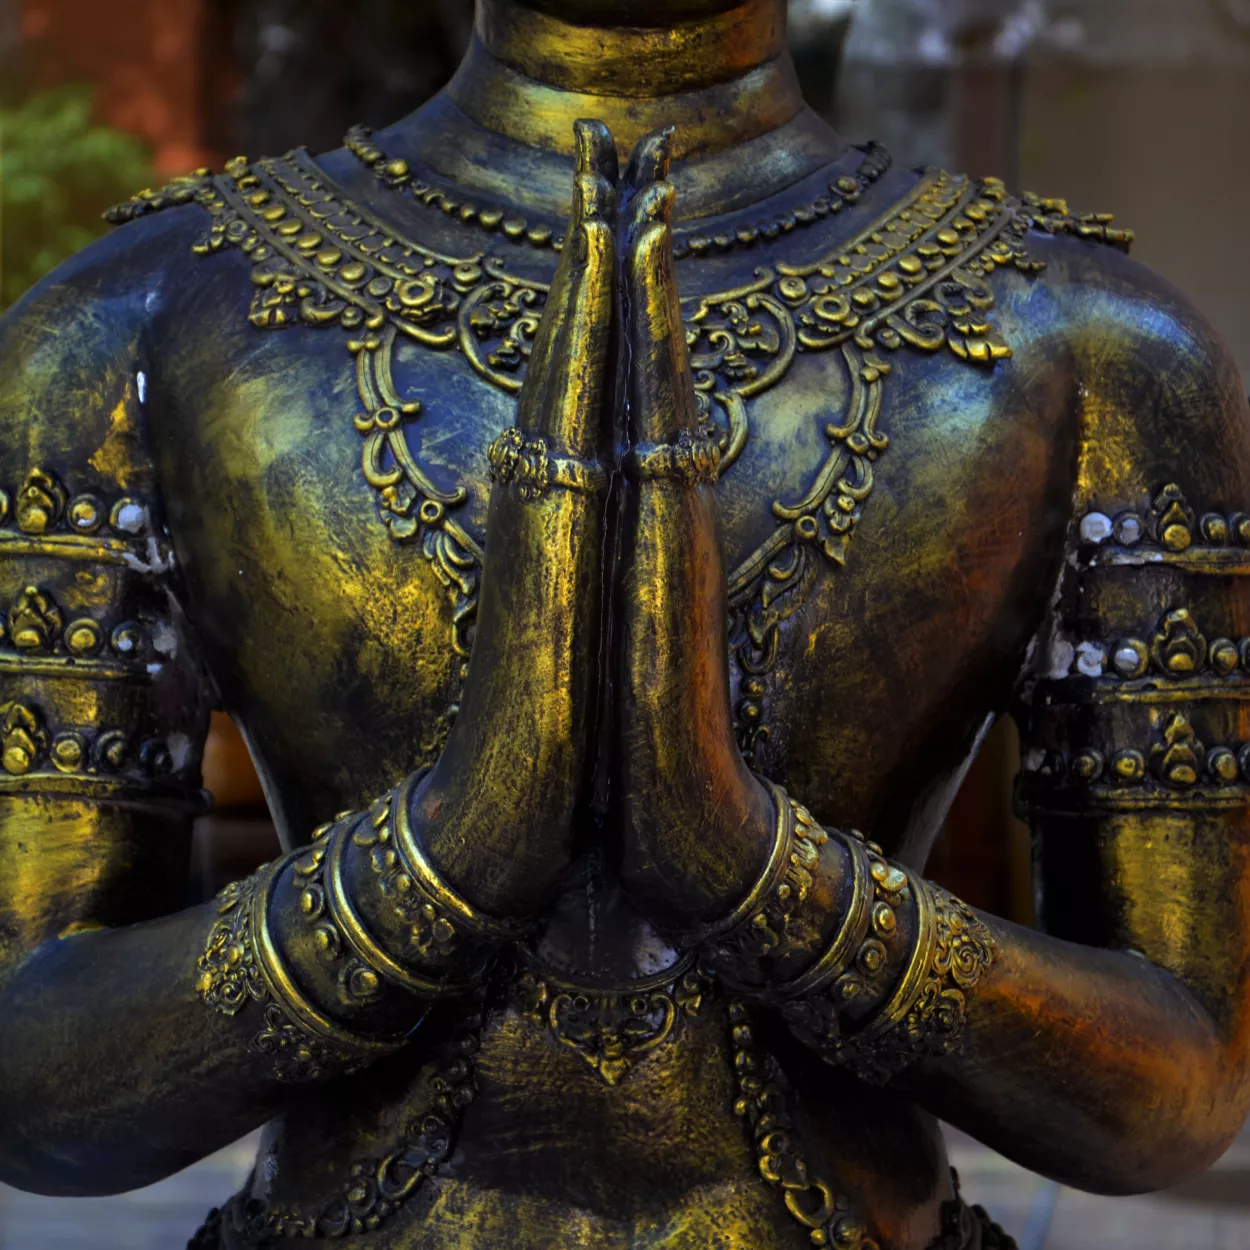 Bronze statue with hands in prayer